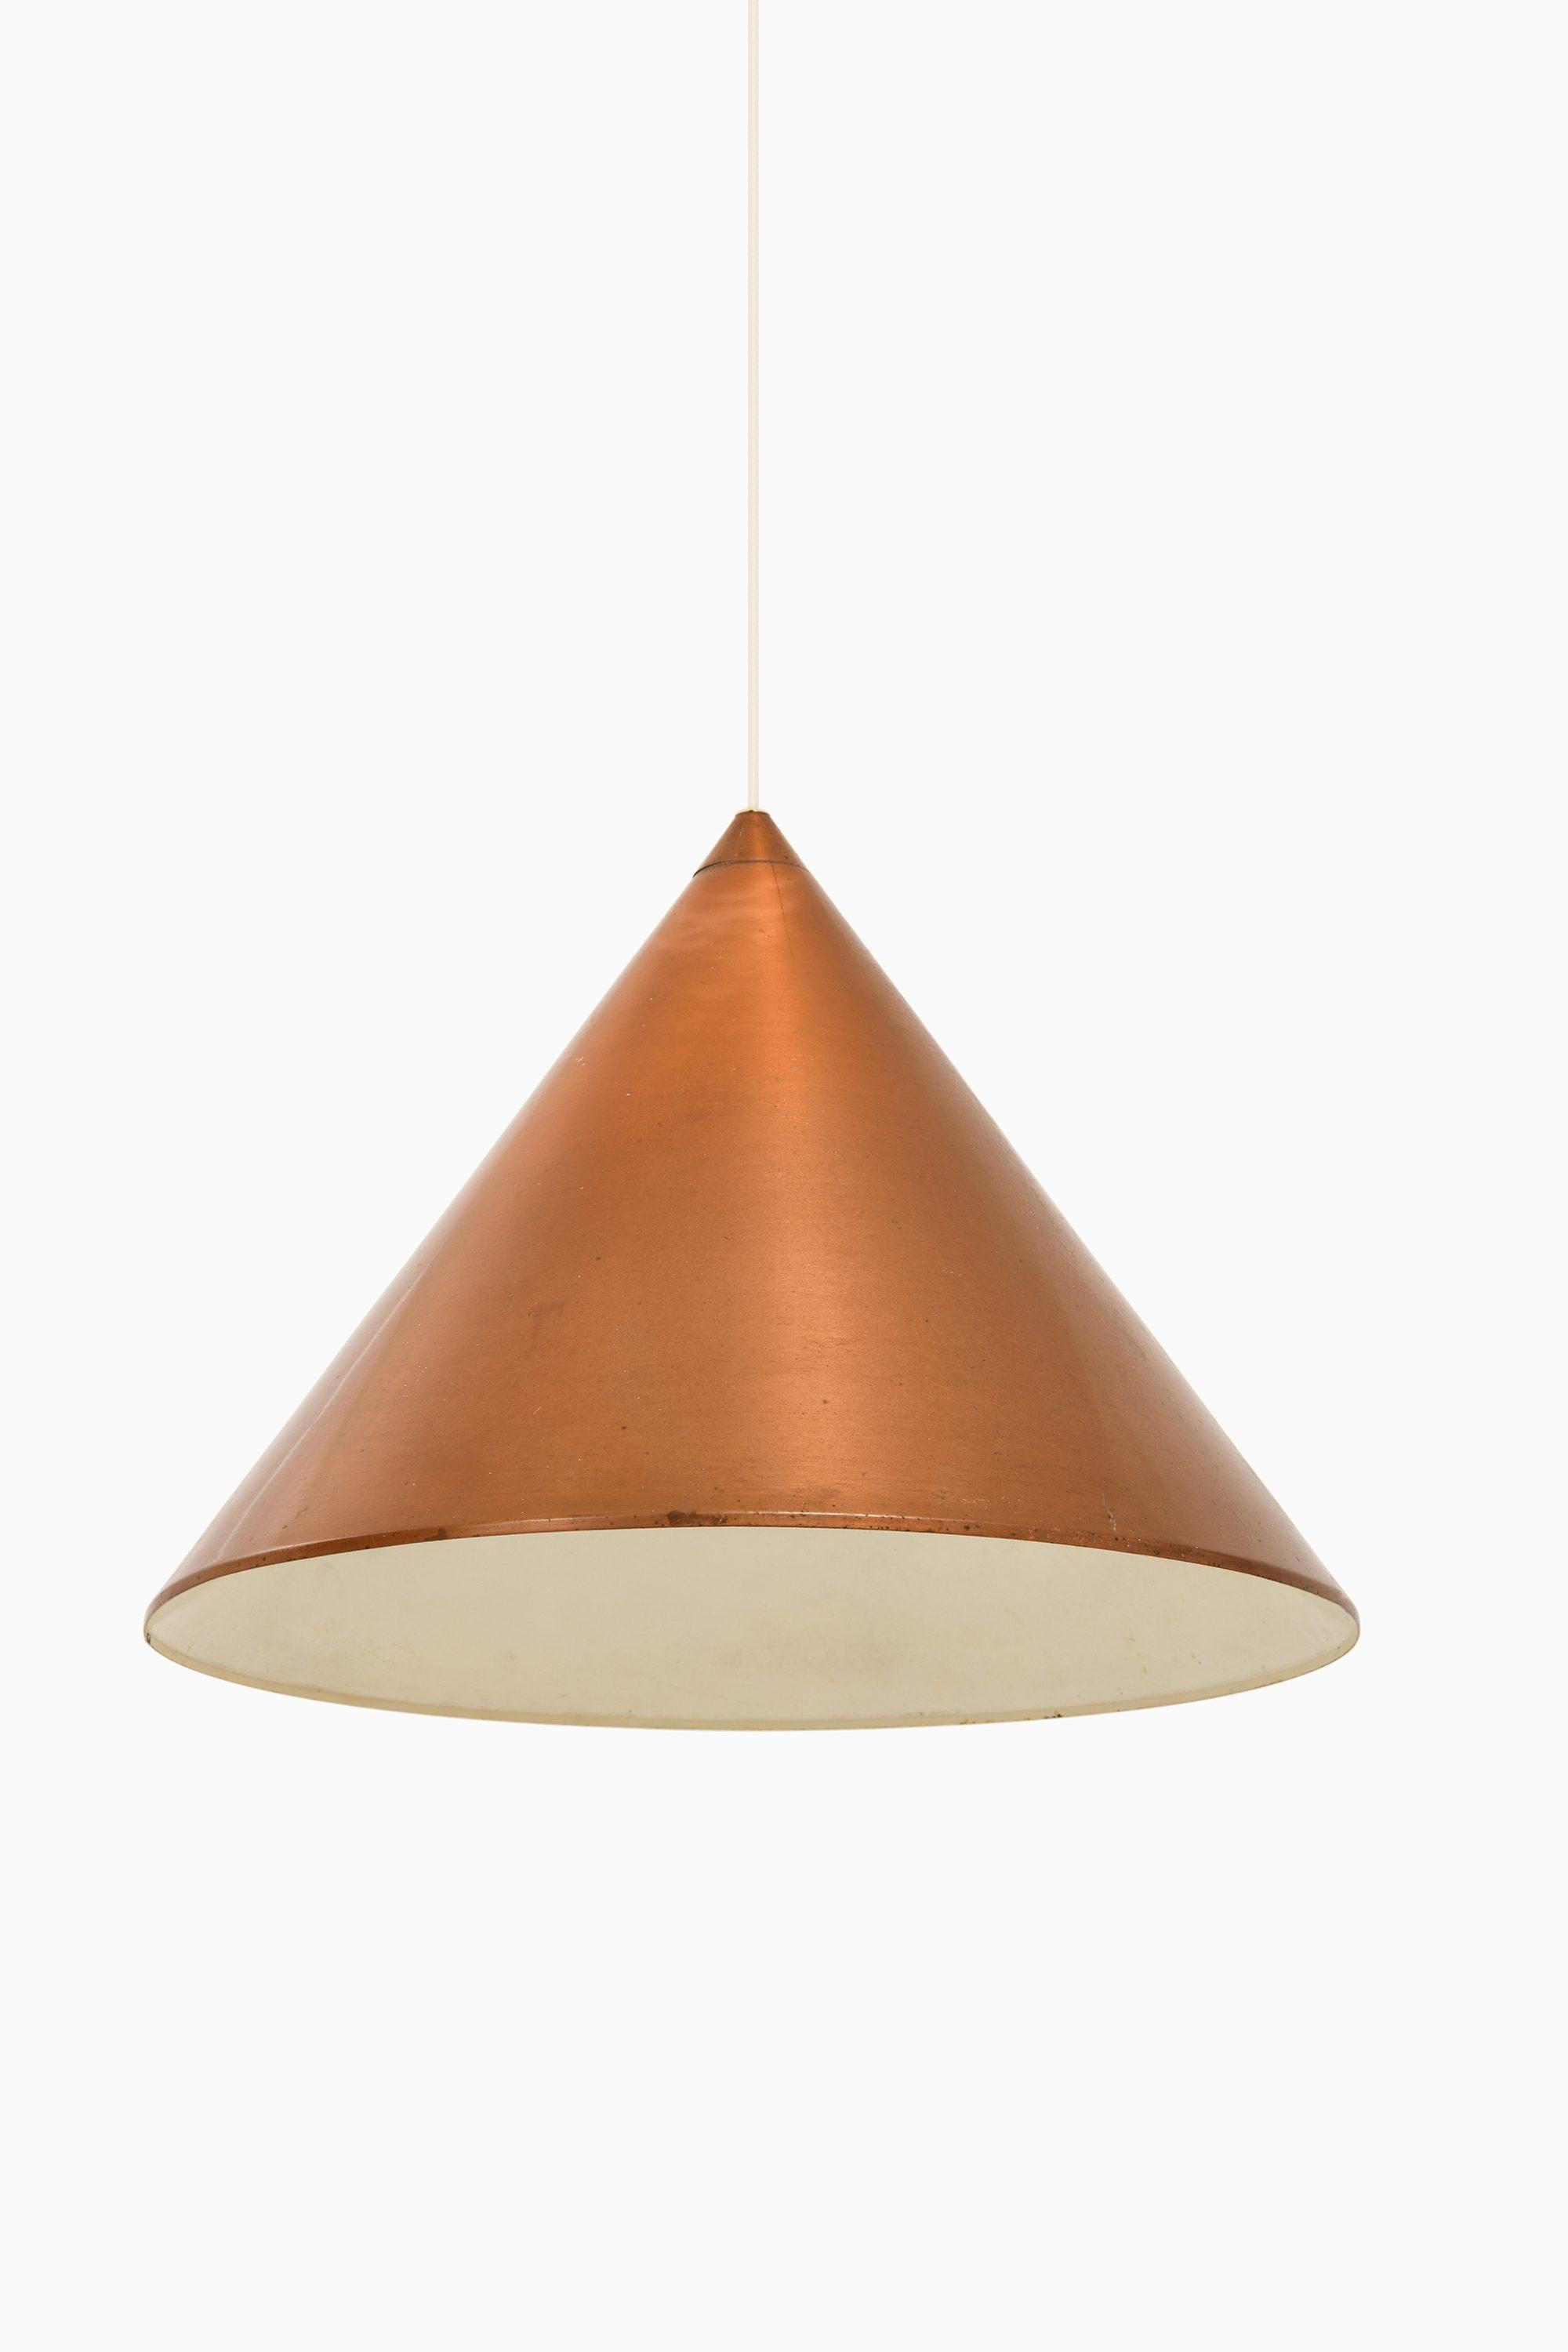 Scandinavian Modern Ceiling Lamp in Copper, 1960's For Sale